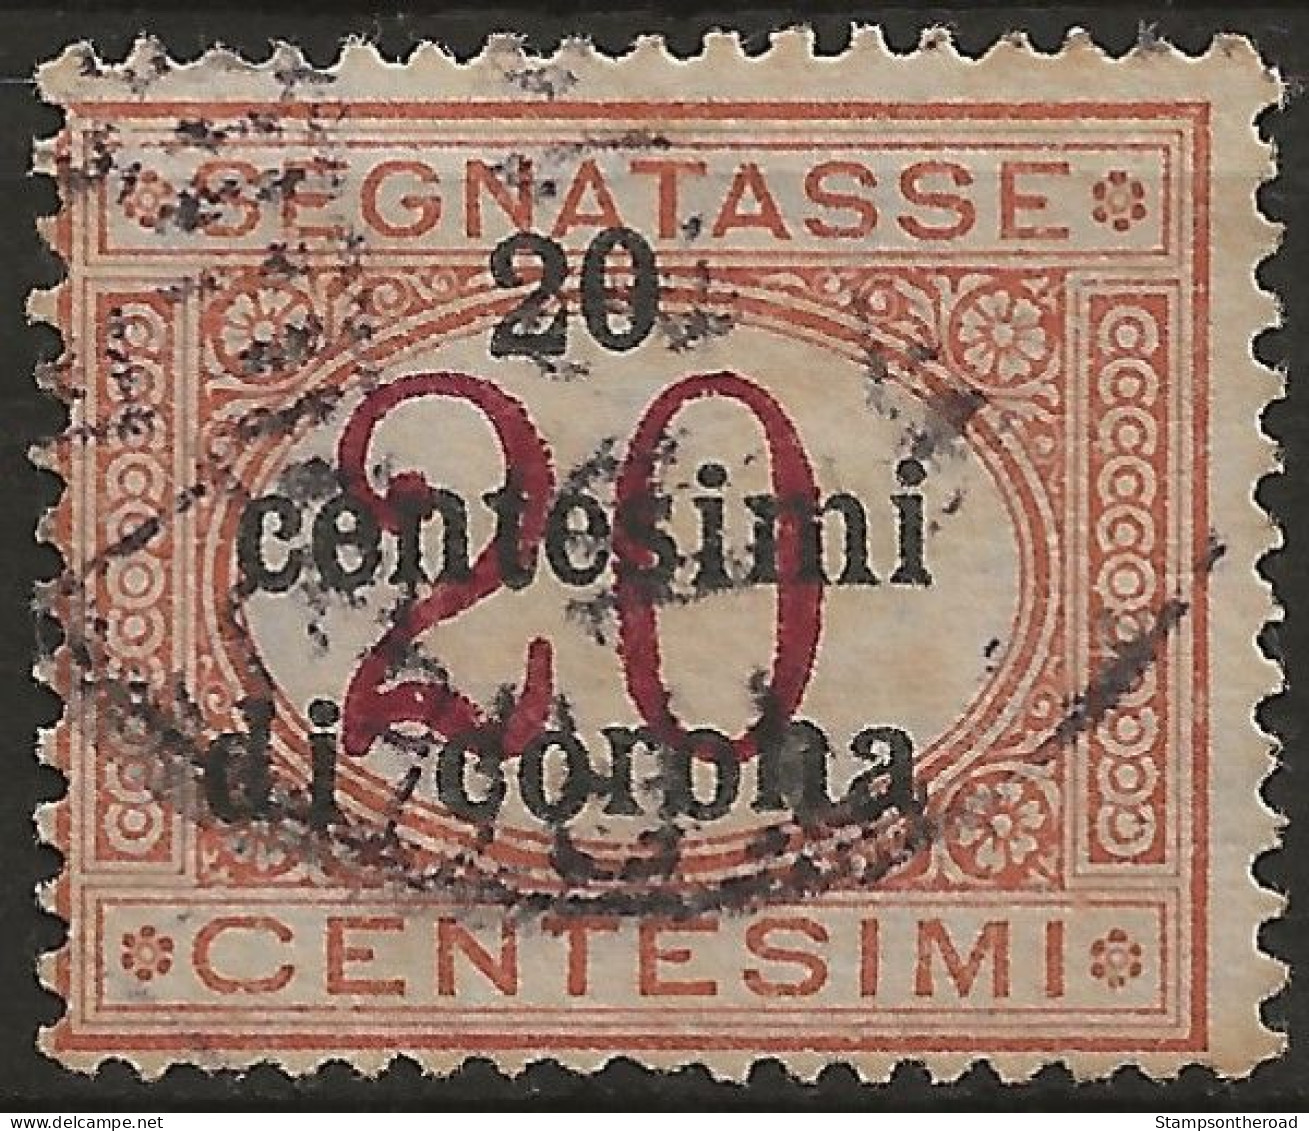 TRTTSx3U6,1919 Terre Redente - Trento E Trieste, Sassone Nr. 3, Segnatasse Usato Per Posta °/ - Trento & Trieste